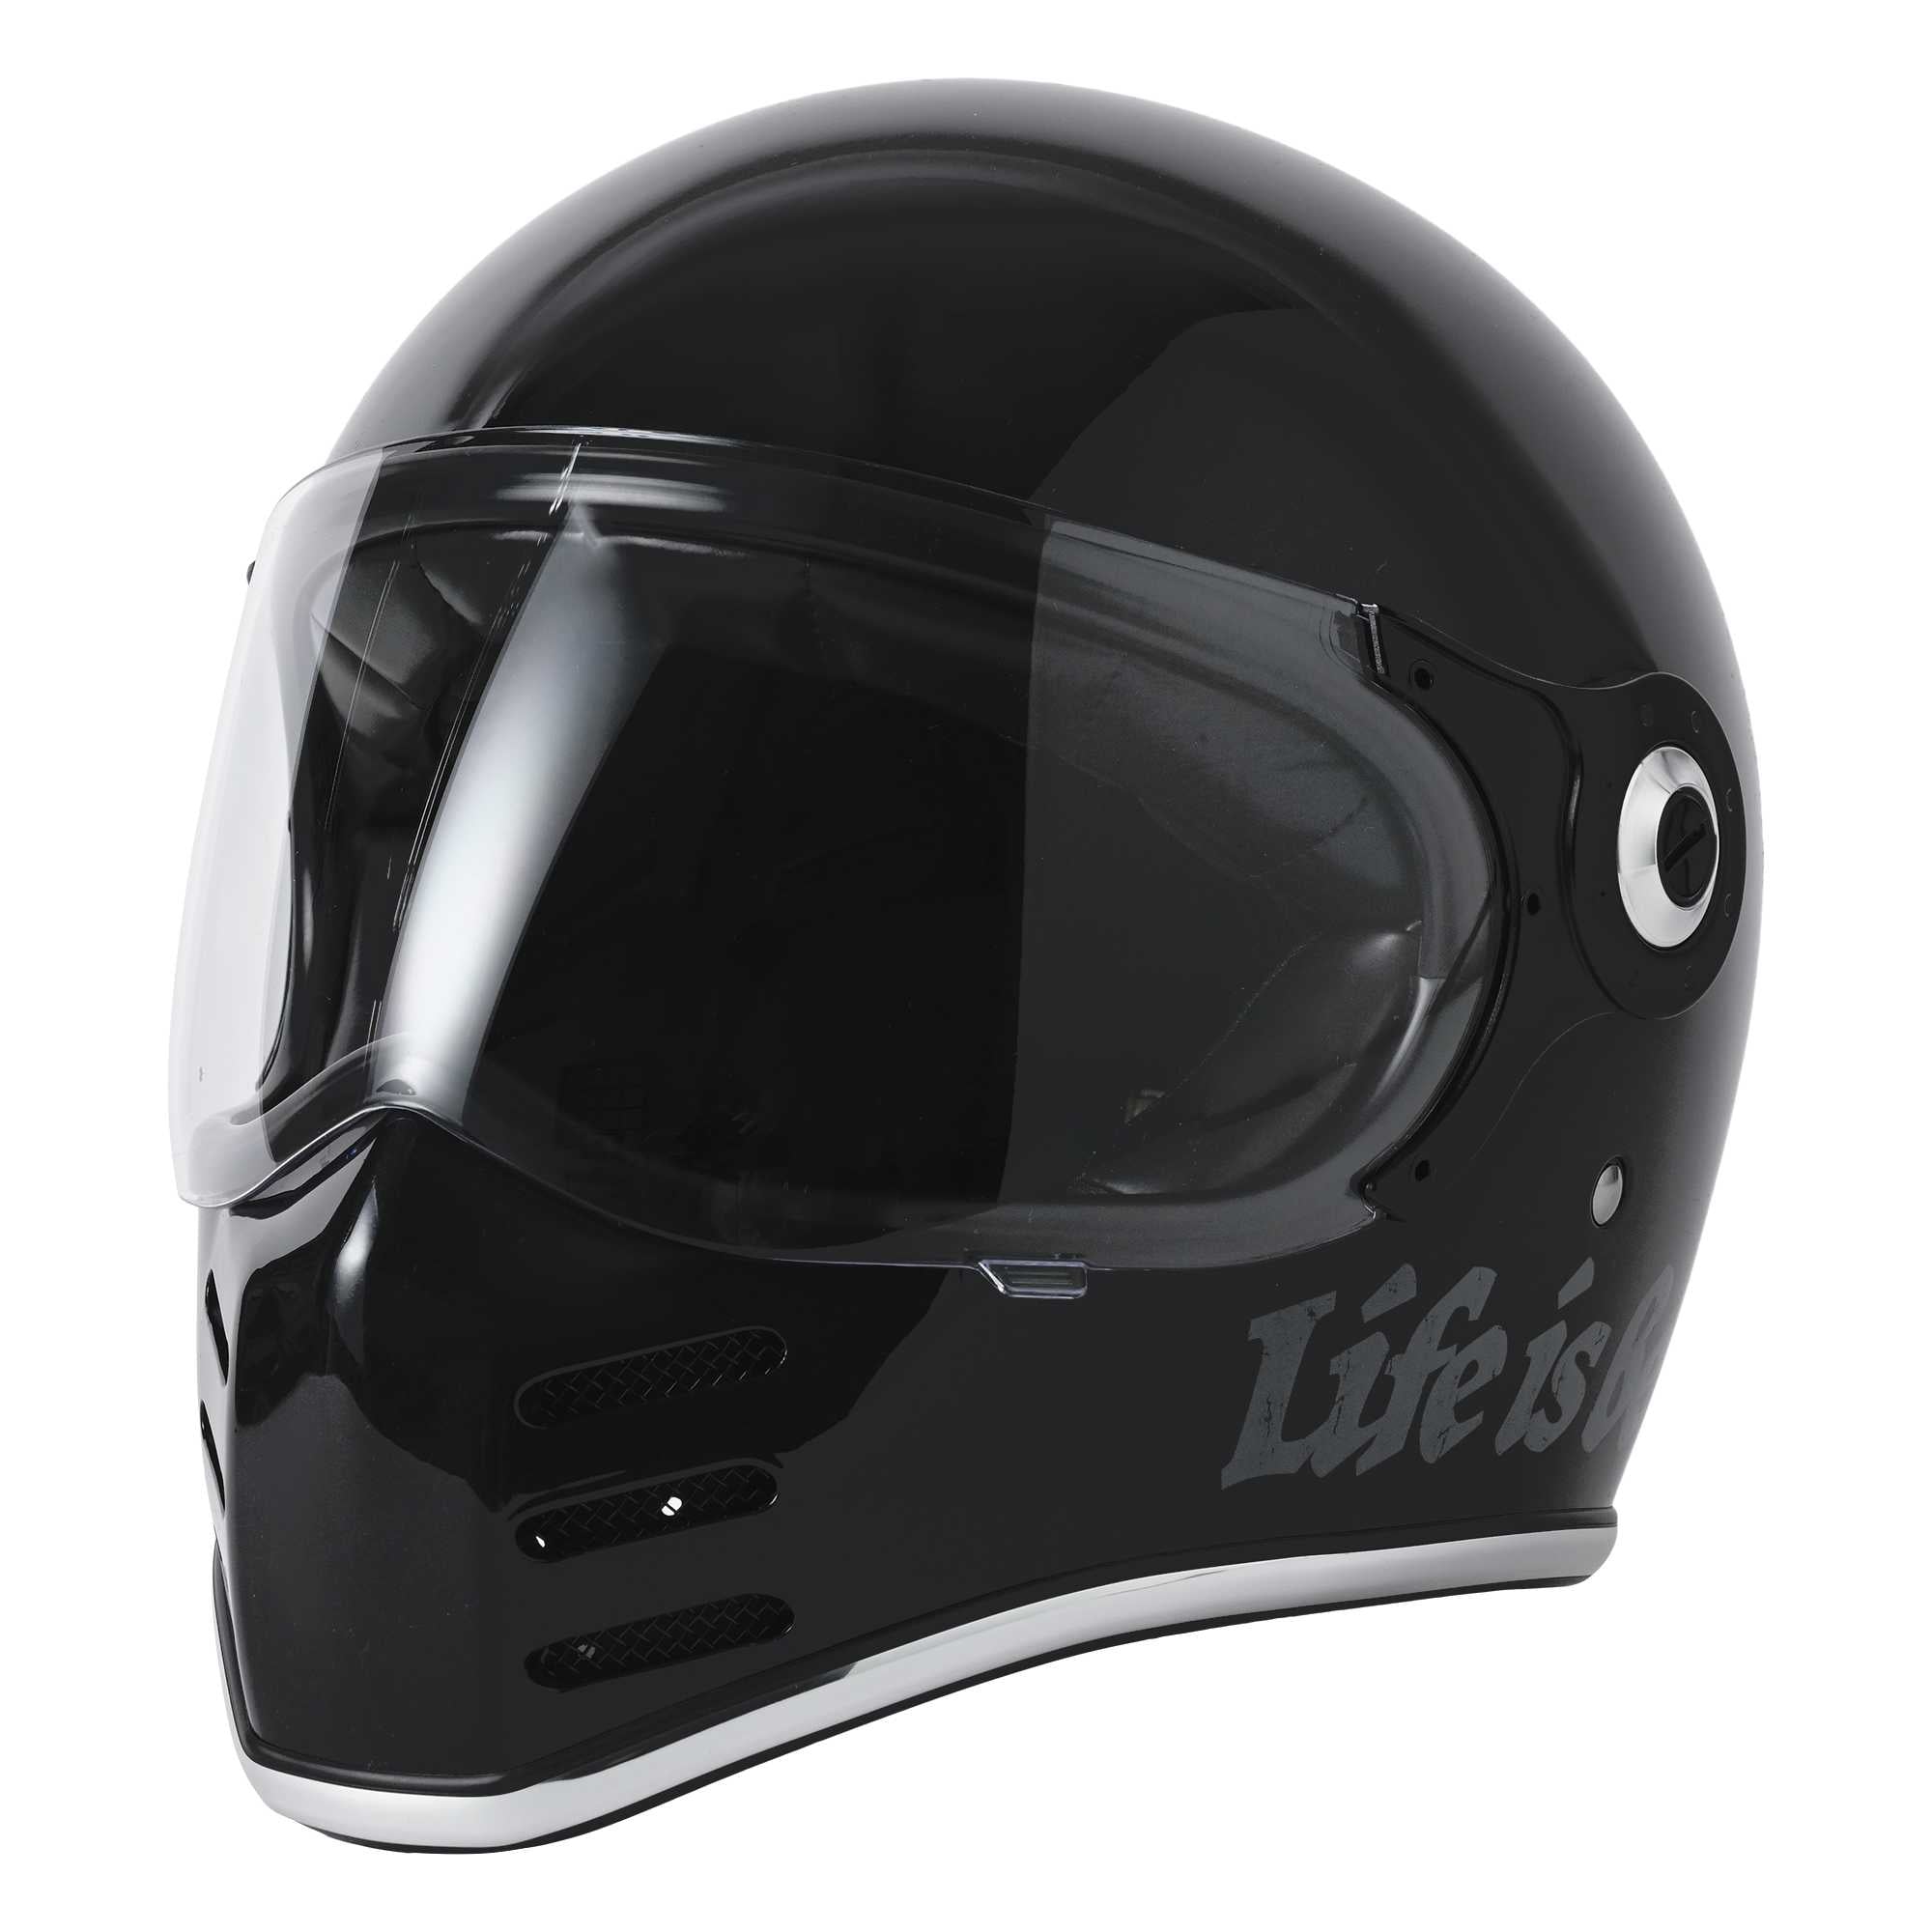 RIDEZ X HELMET 限量型号 2WHEEL'S LIFE 全罩摩托车头盔